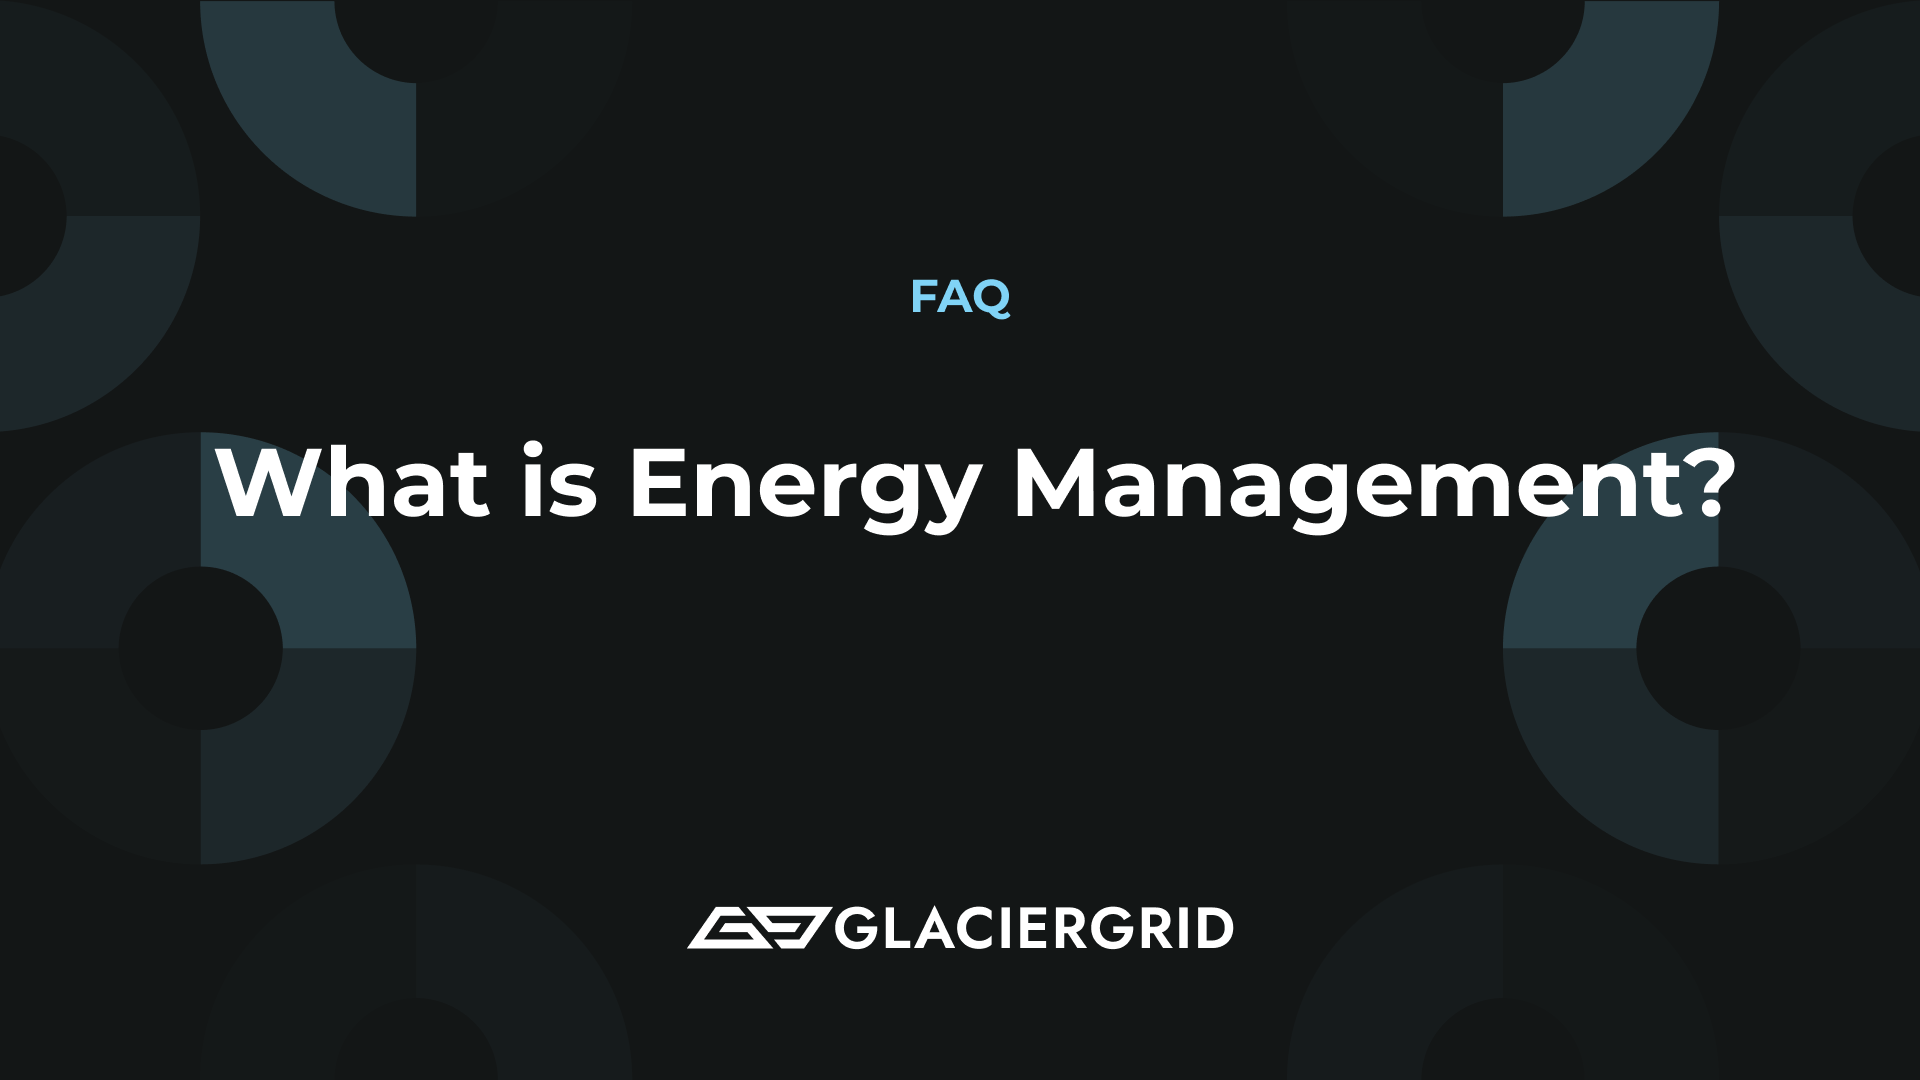 GlacierGrid Energy Management FAQ